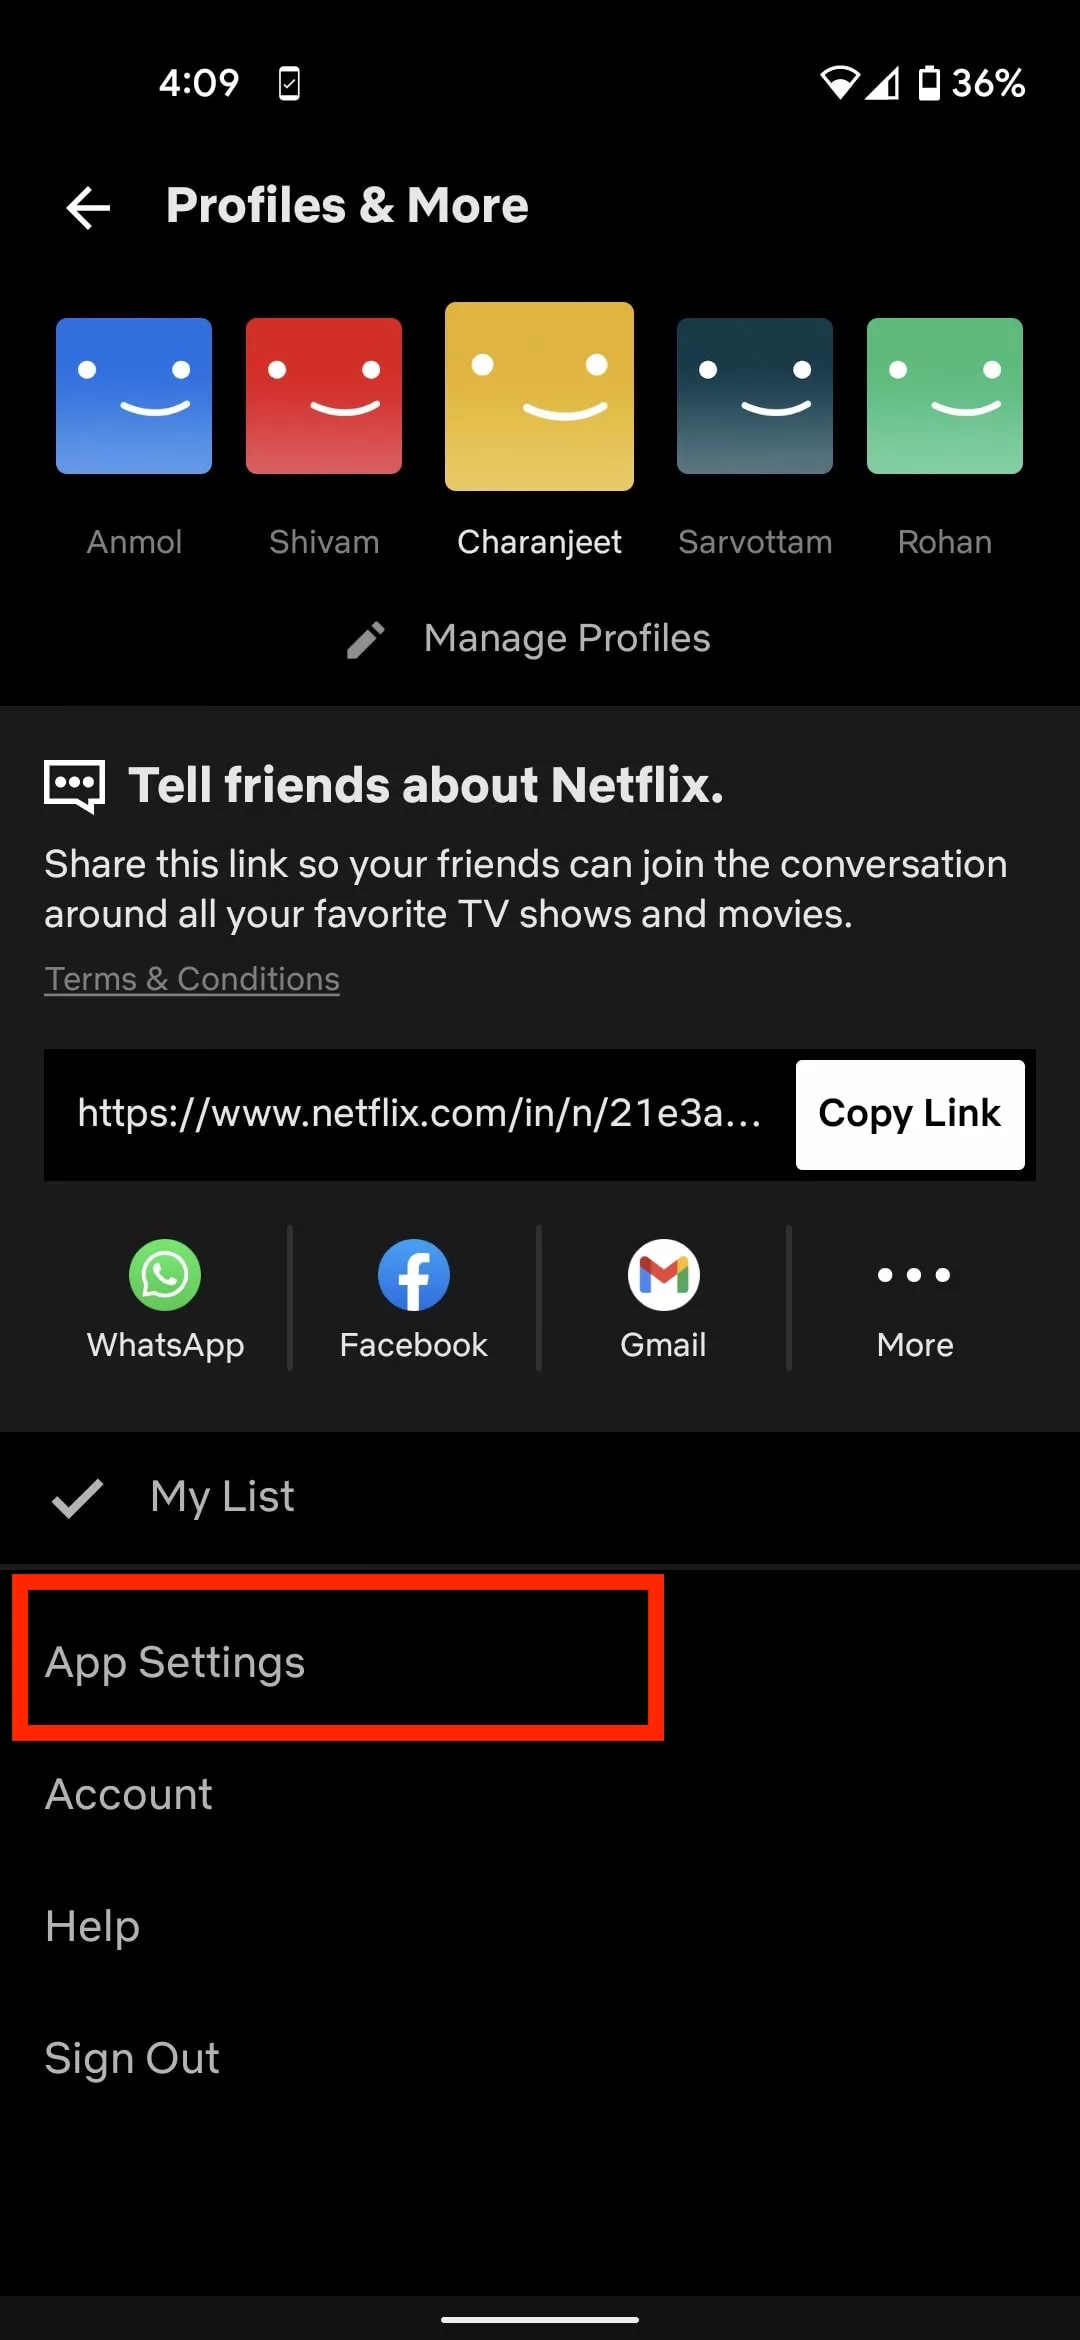 Netflix Android app settings